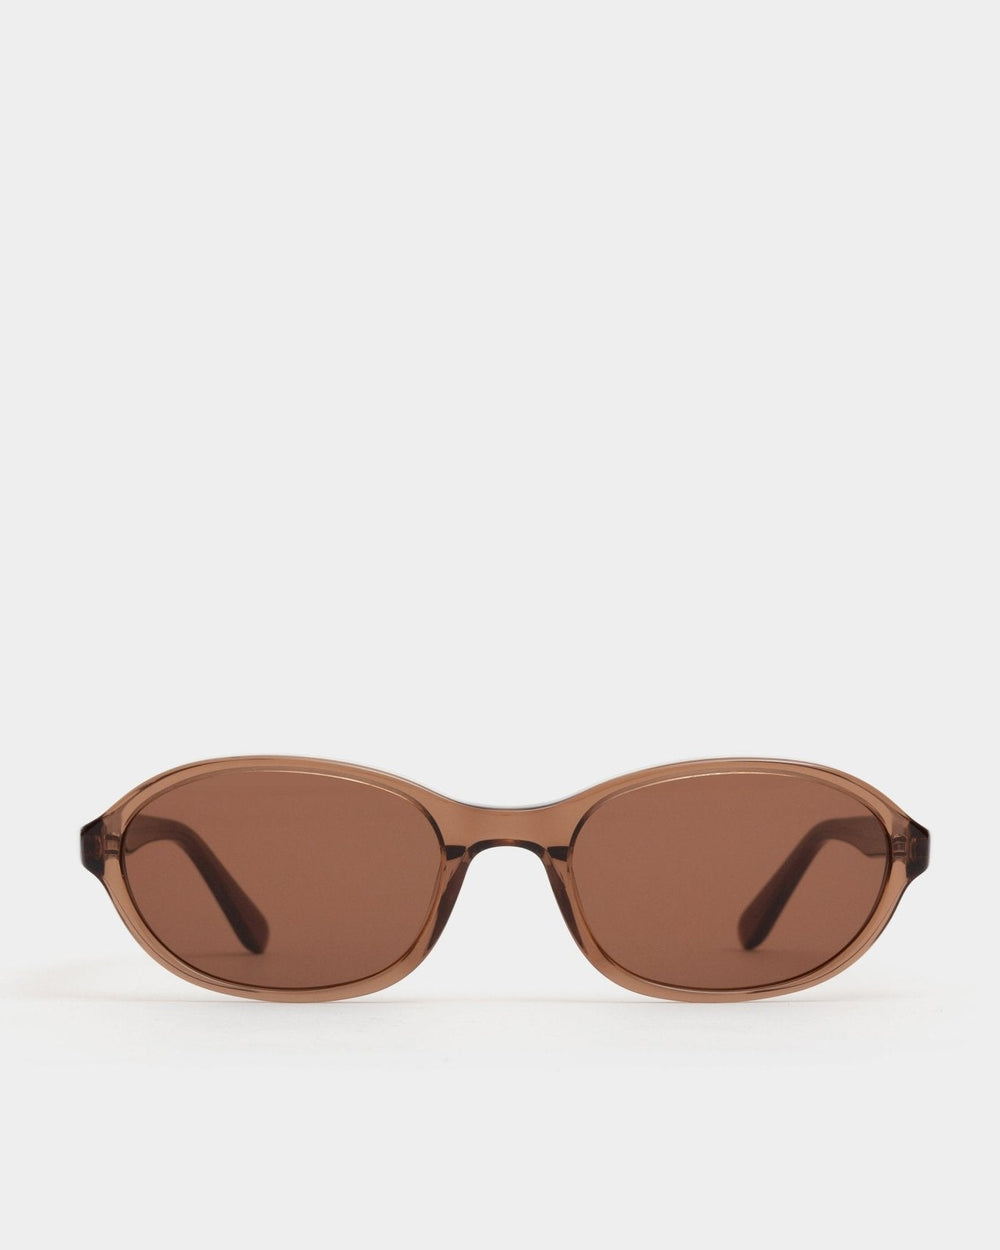 Bibi Transparent Brown Sunglasses